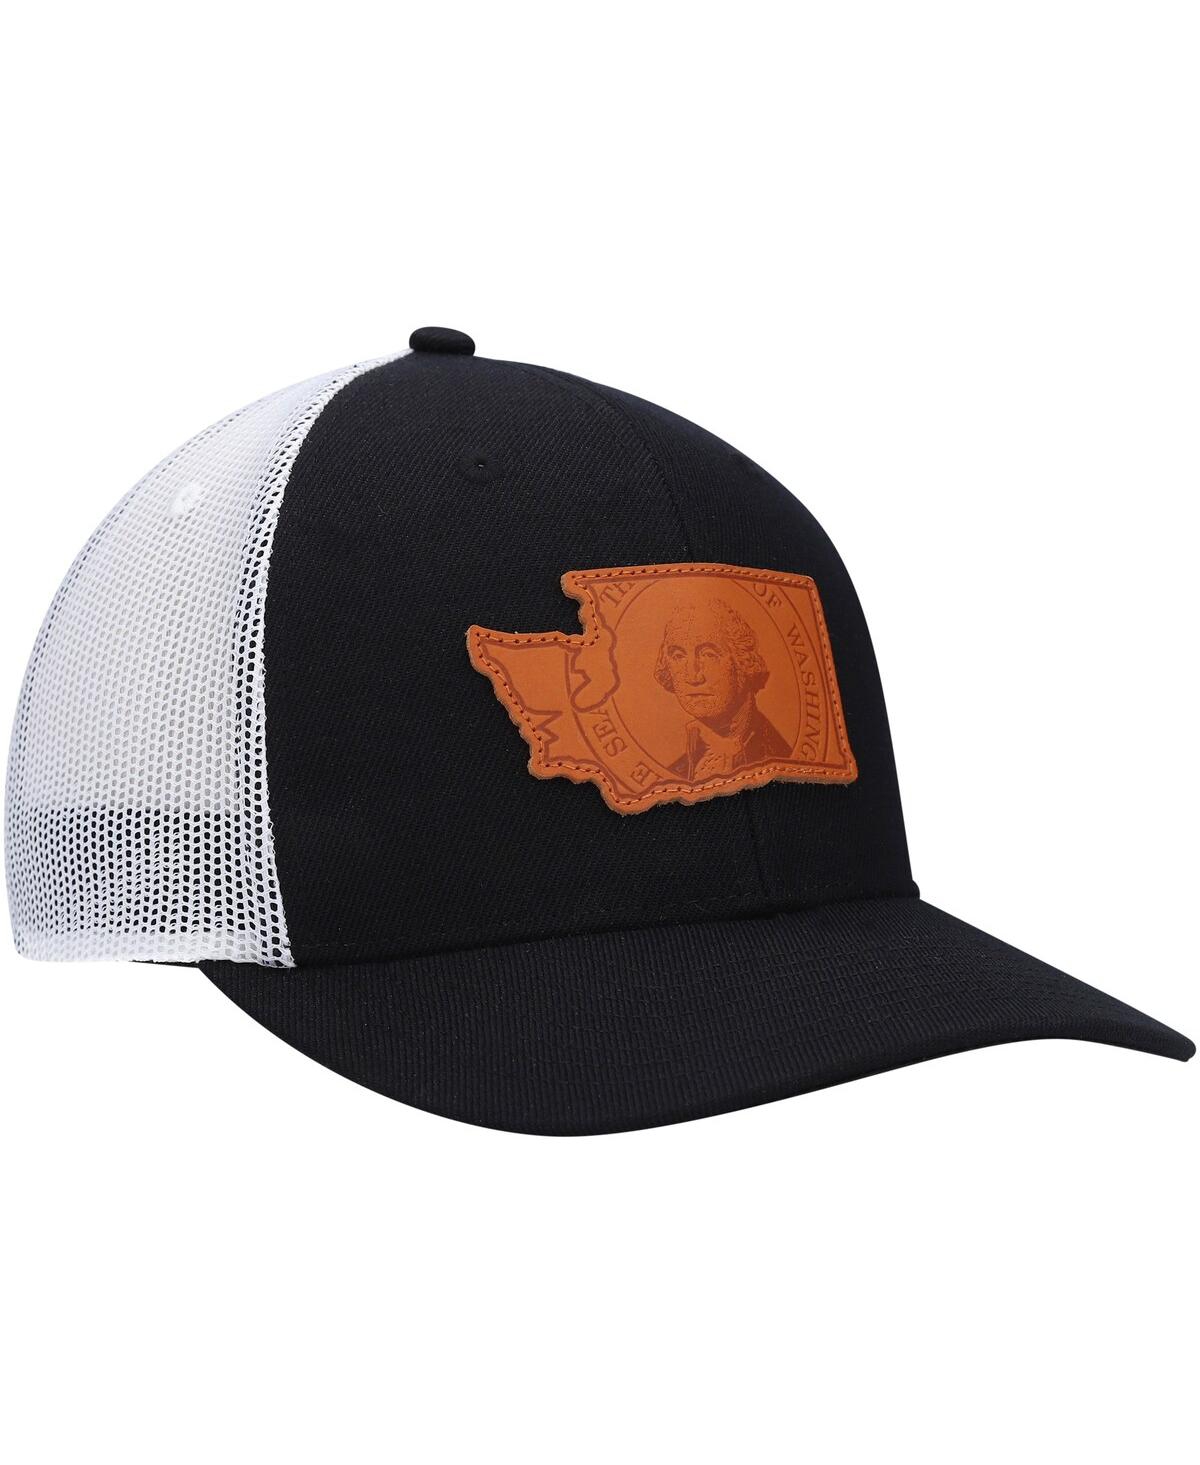 Shop Local Crowns Men's  Black Washington Leather State Applique Trucker Snapback Hat